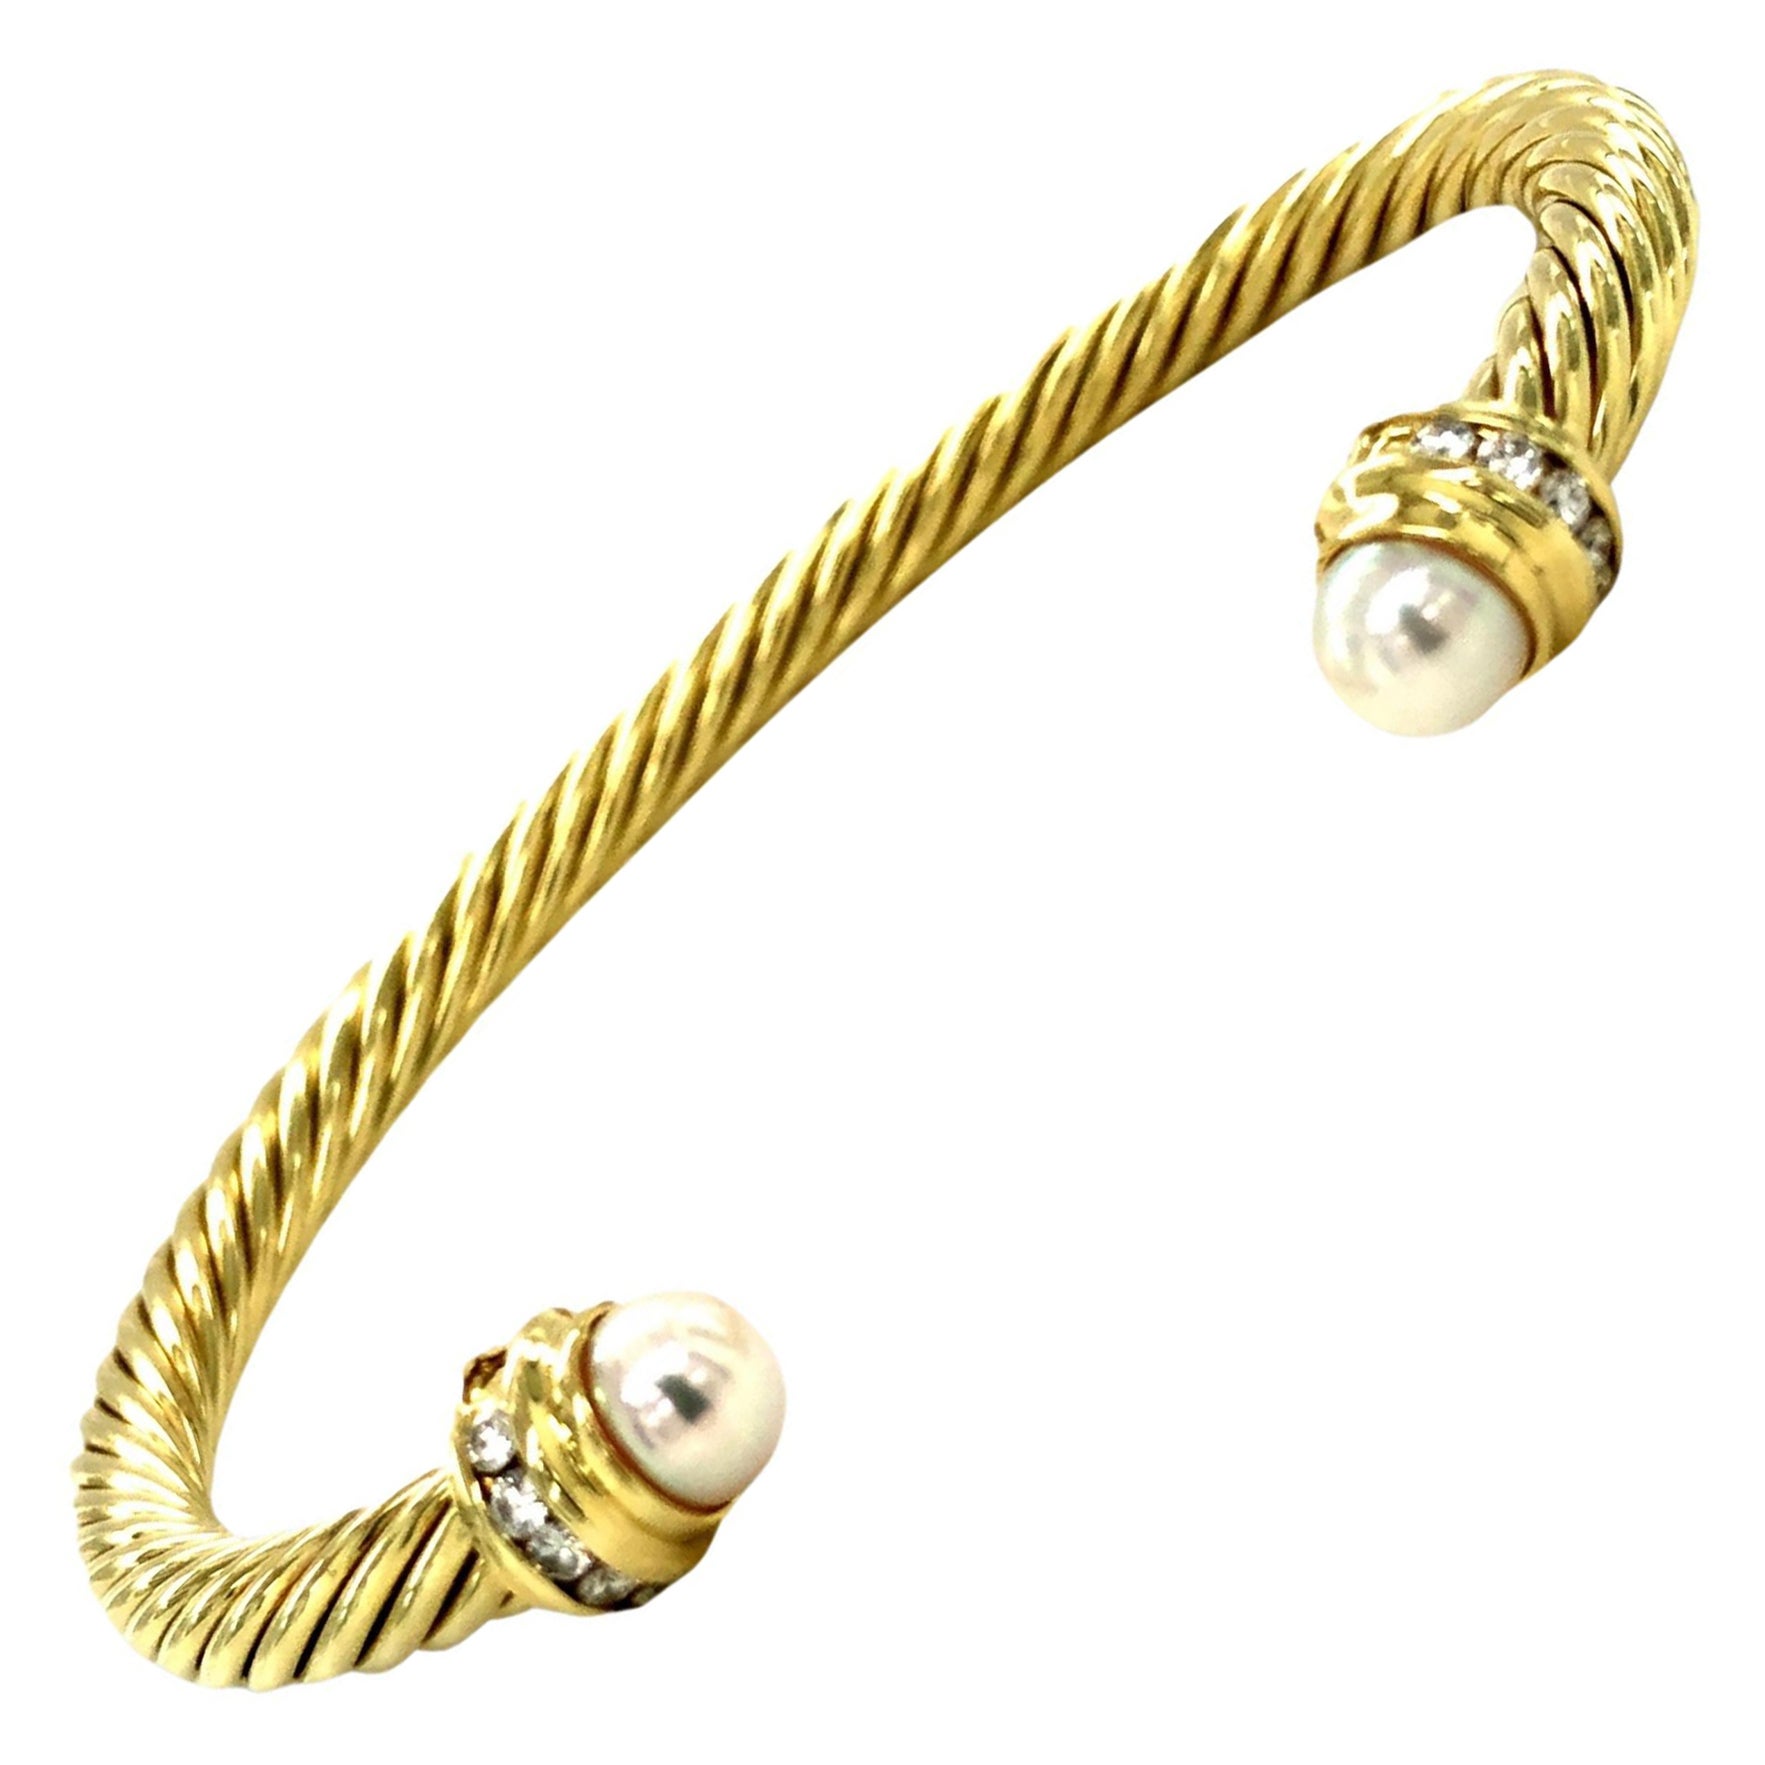 David Yurman 14K Yellow Gold Pearls and Diamonds Cable Bracelet